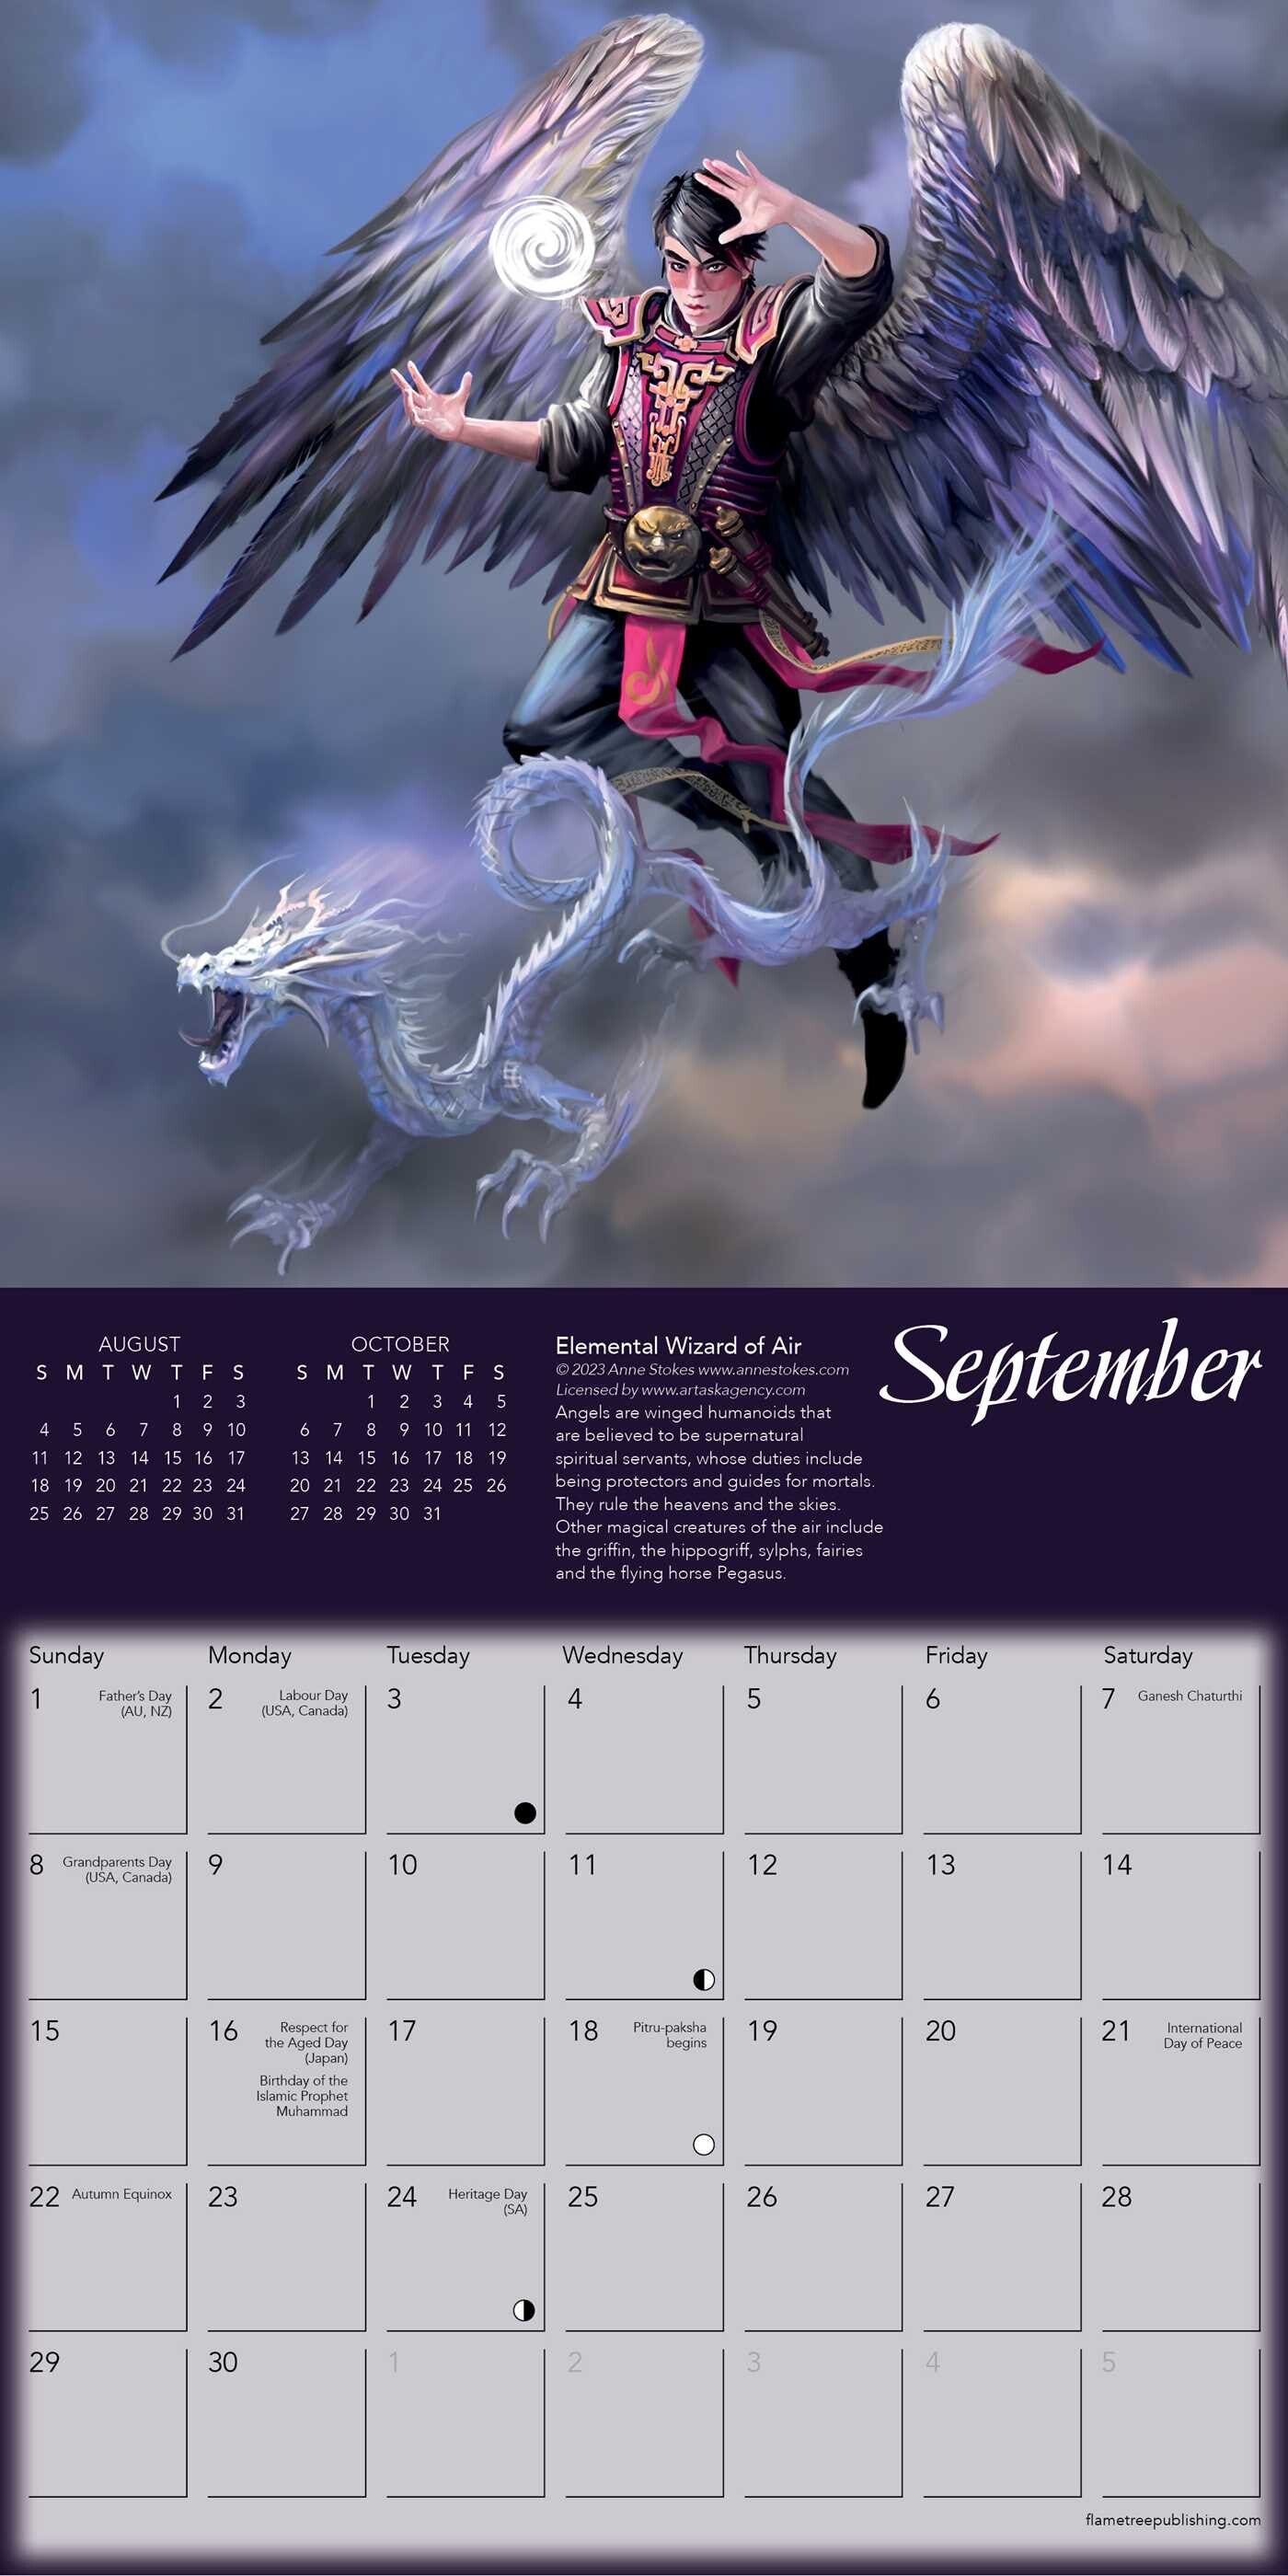 Anne Stokes: Elemental Magic Mini Wandkalender 2024 (Kunstkalender)